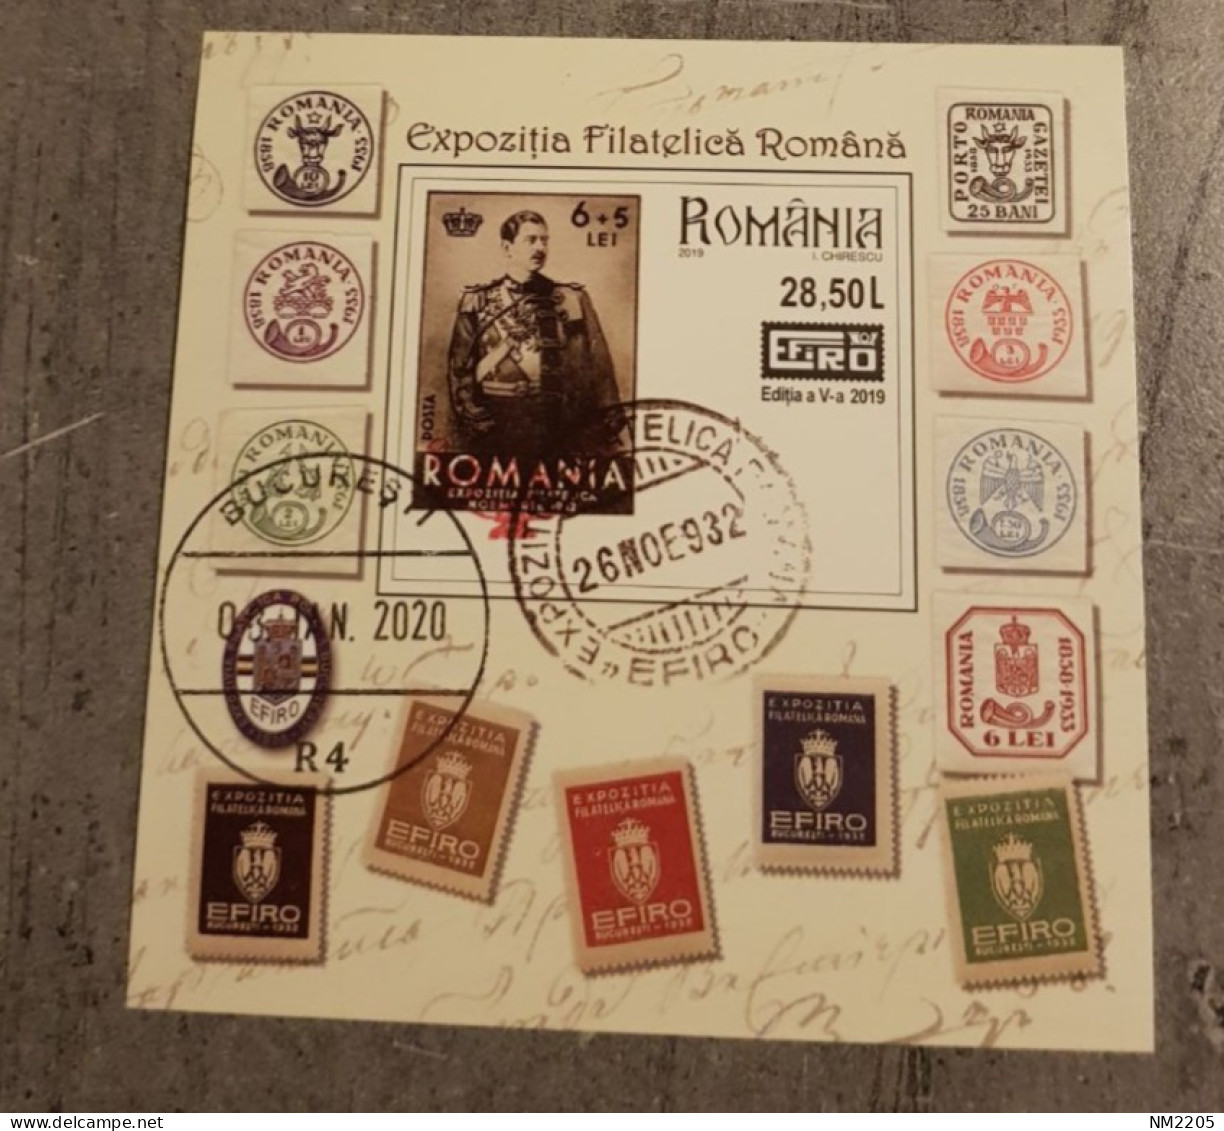 ROMANIA ROMANIAN PHILATELIC EXHIBITION MINIATURE SHEET USED - Used Stamps